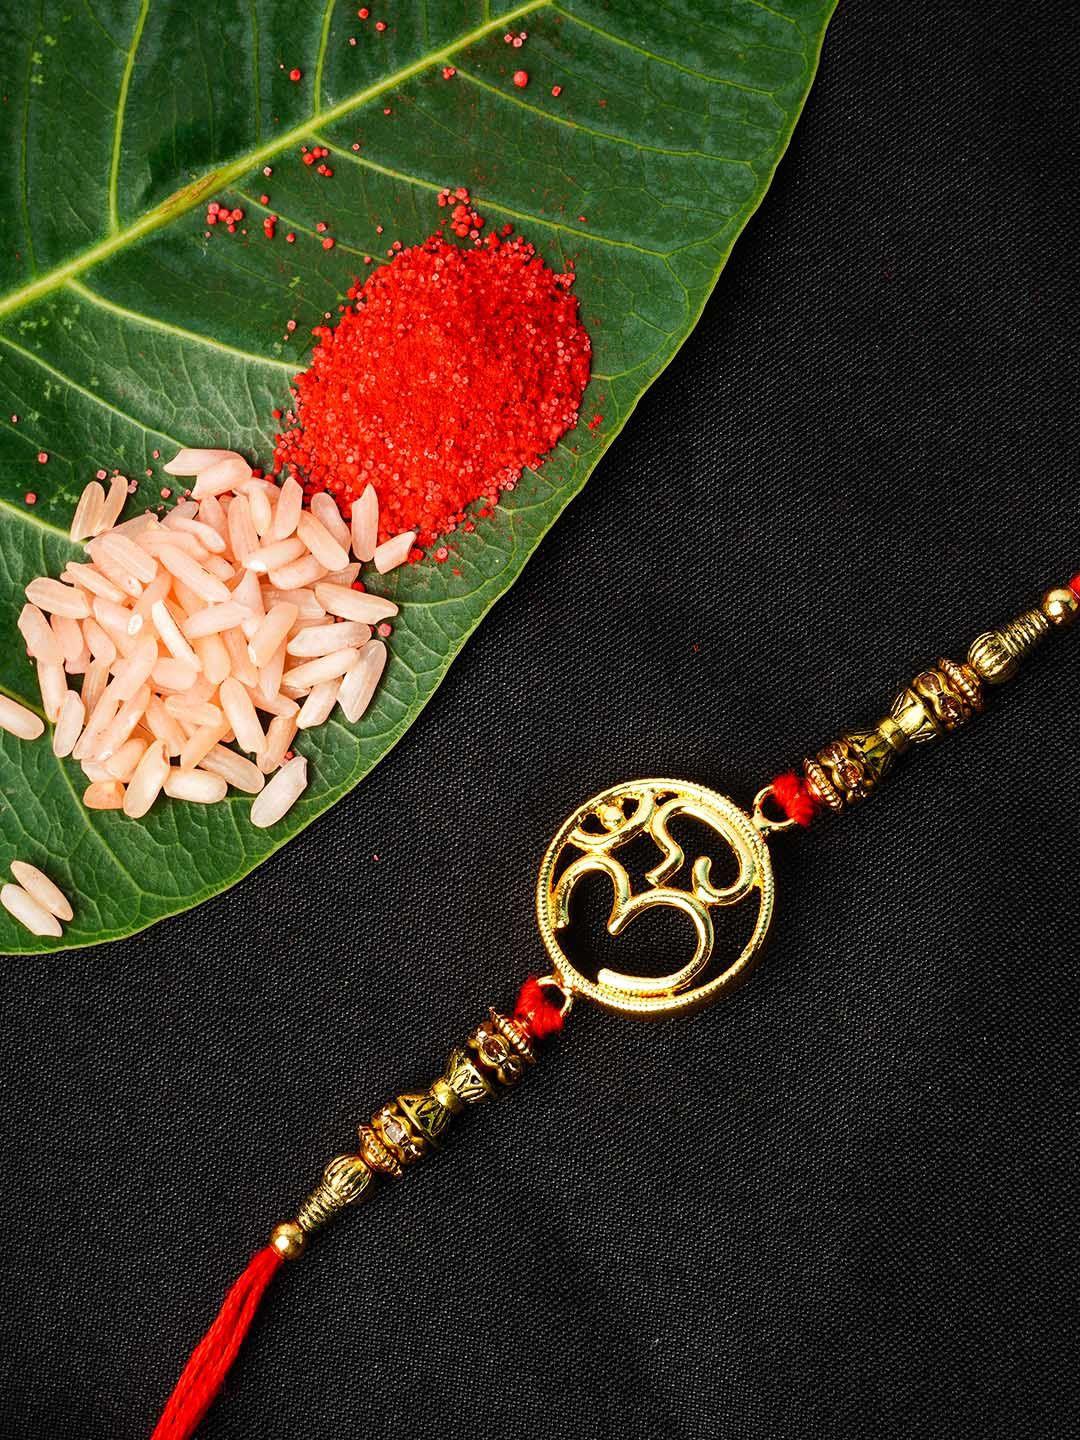 urmika gold toned om pendant rakhi with roli chawal